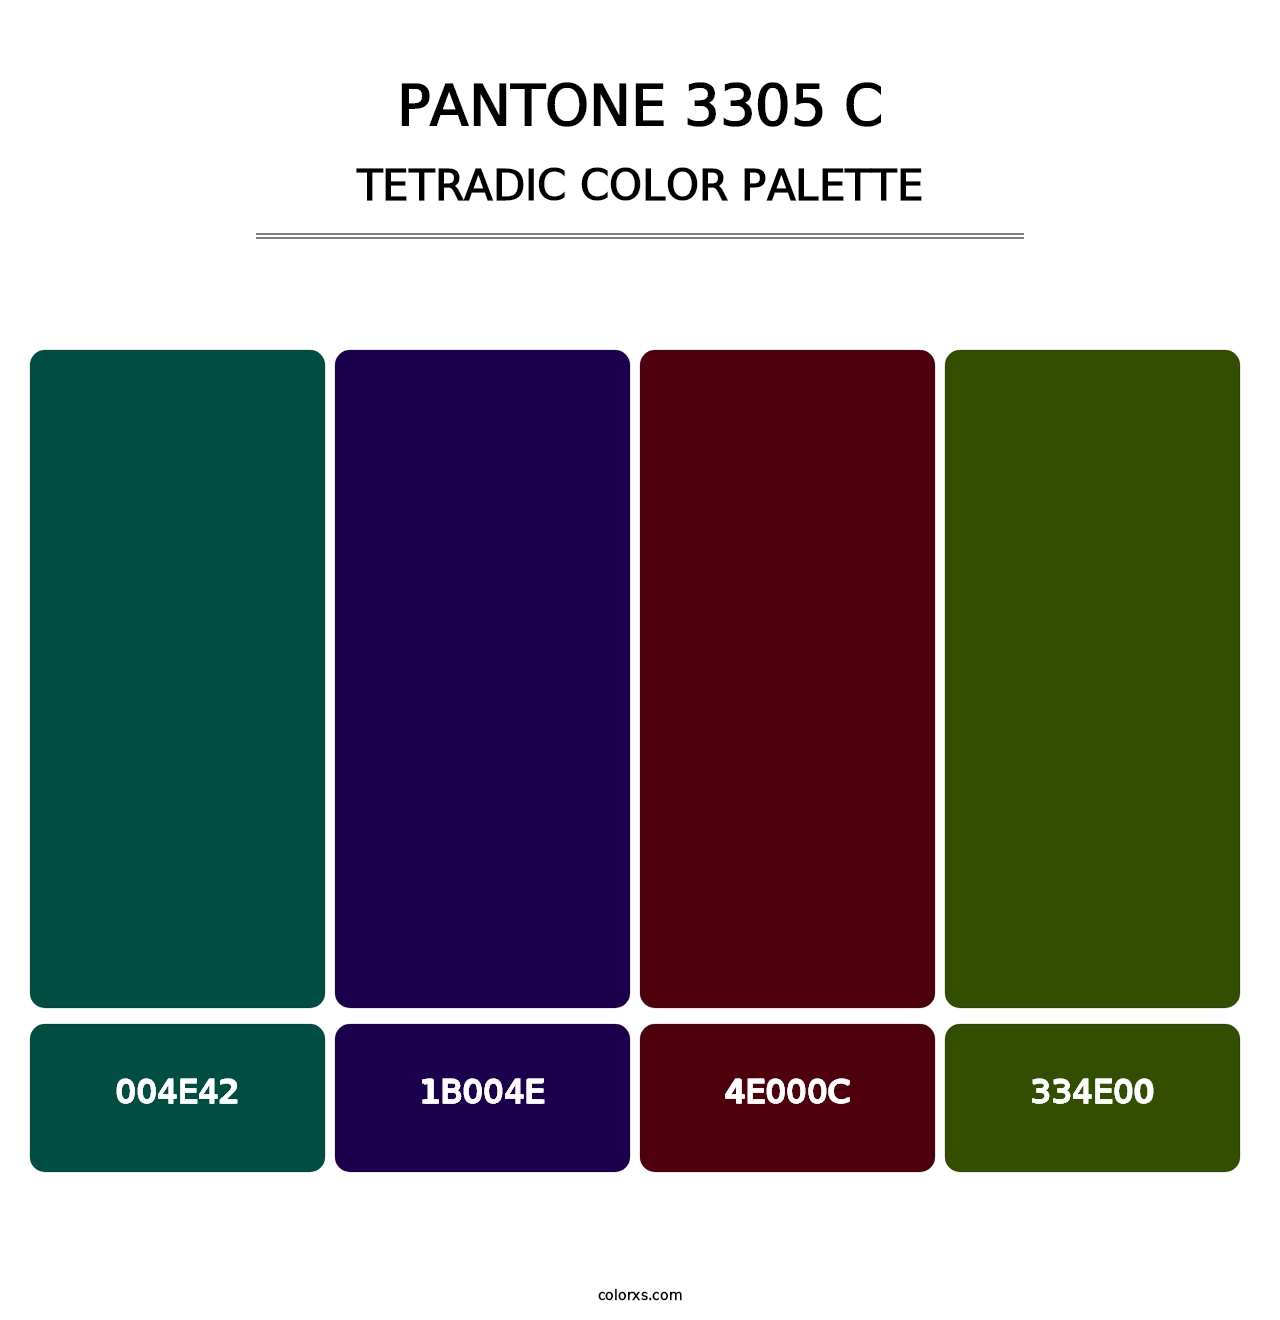 PANTONE 3305 C - Tetradic Color Palette